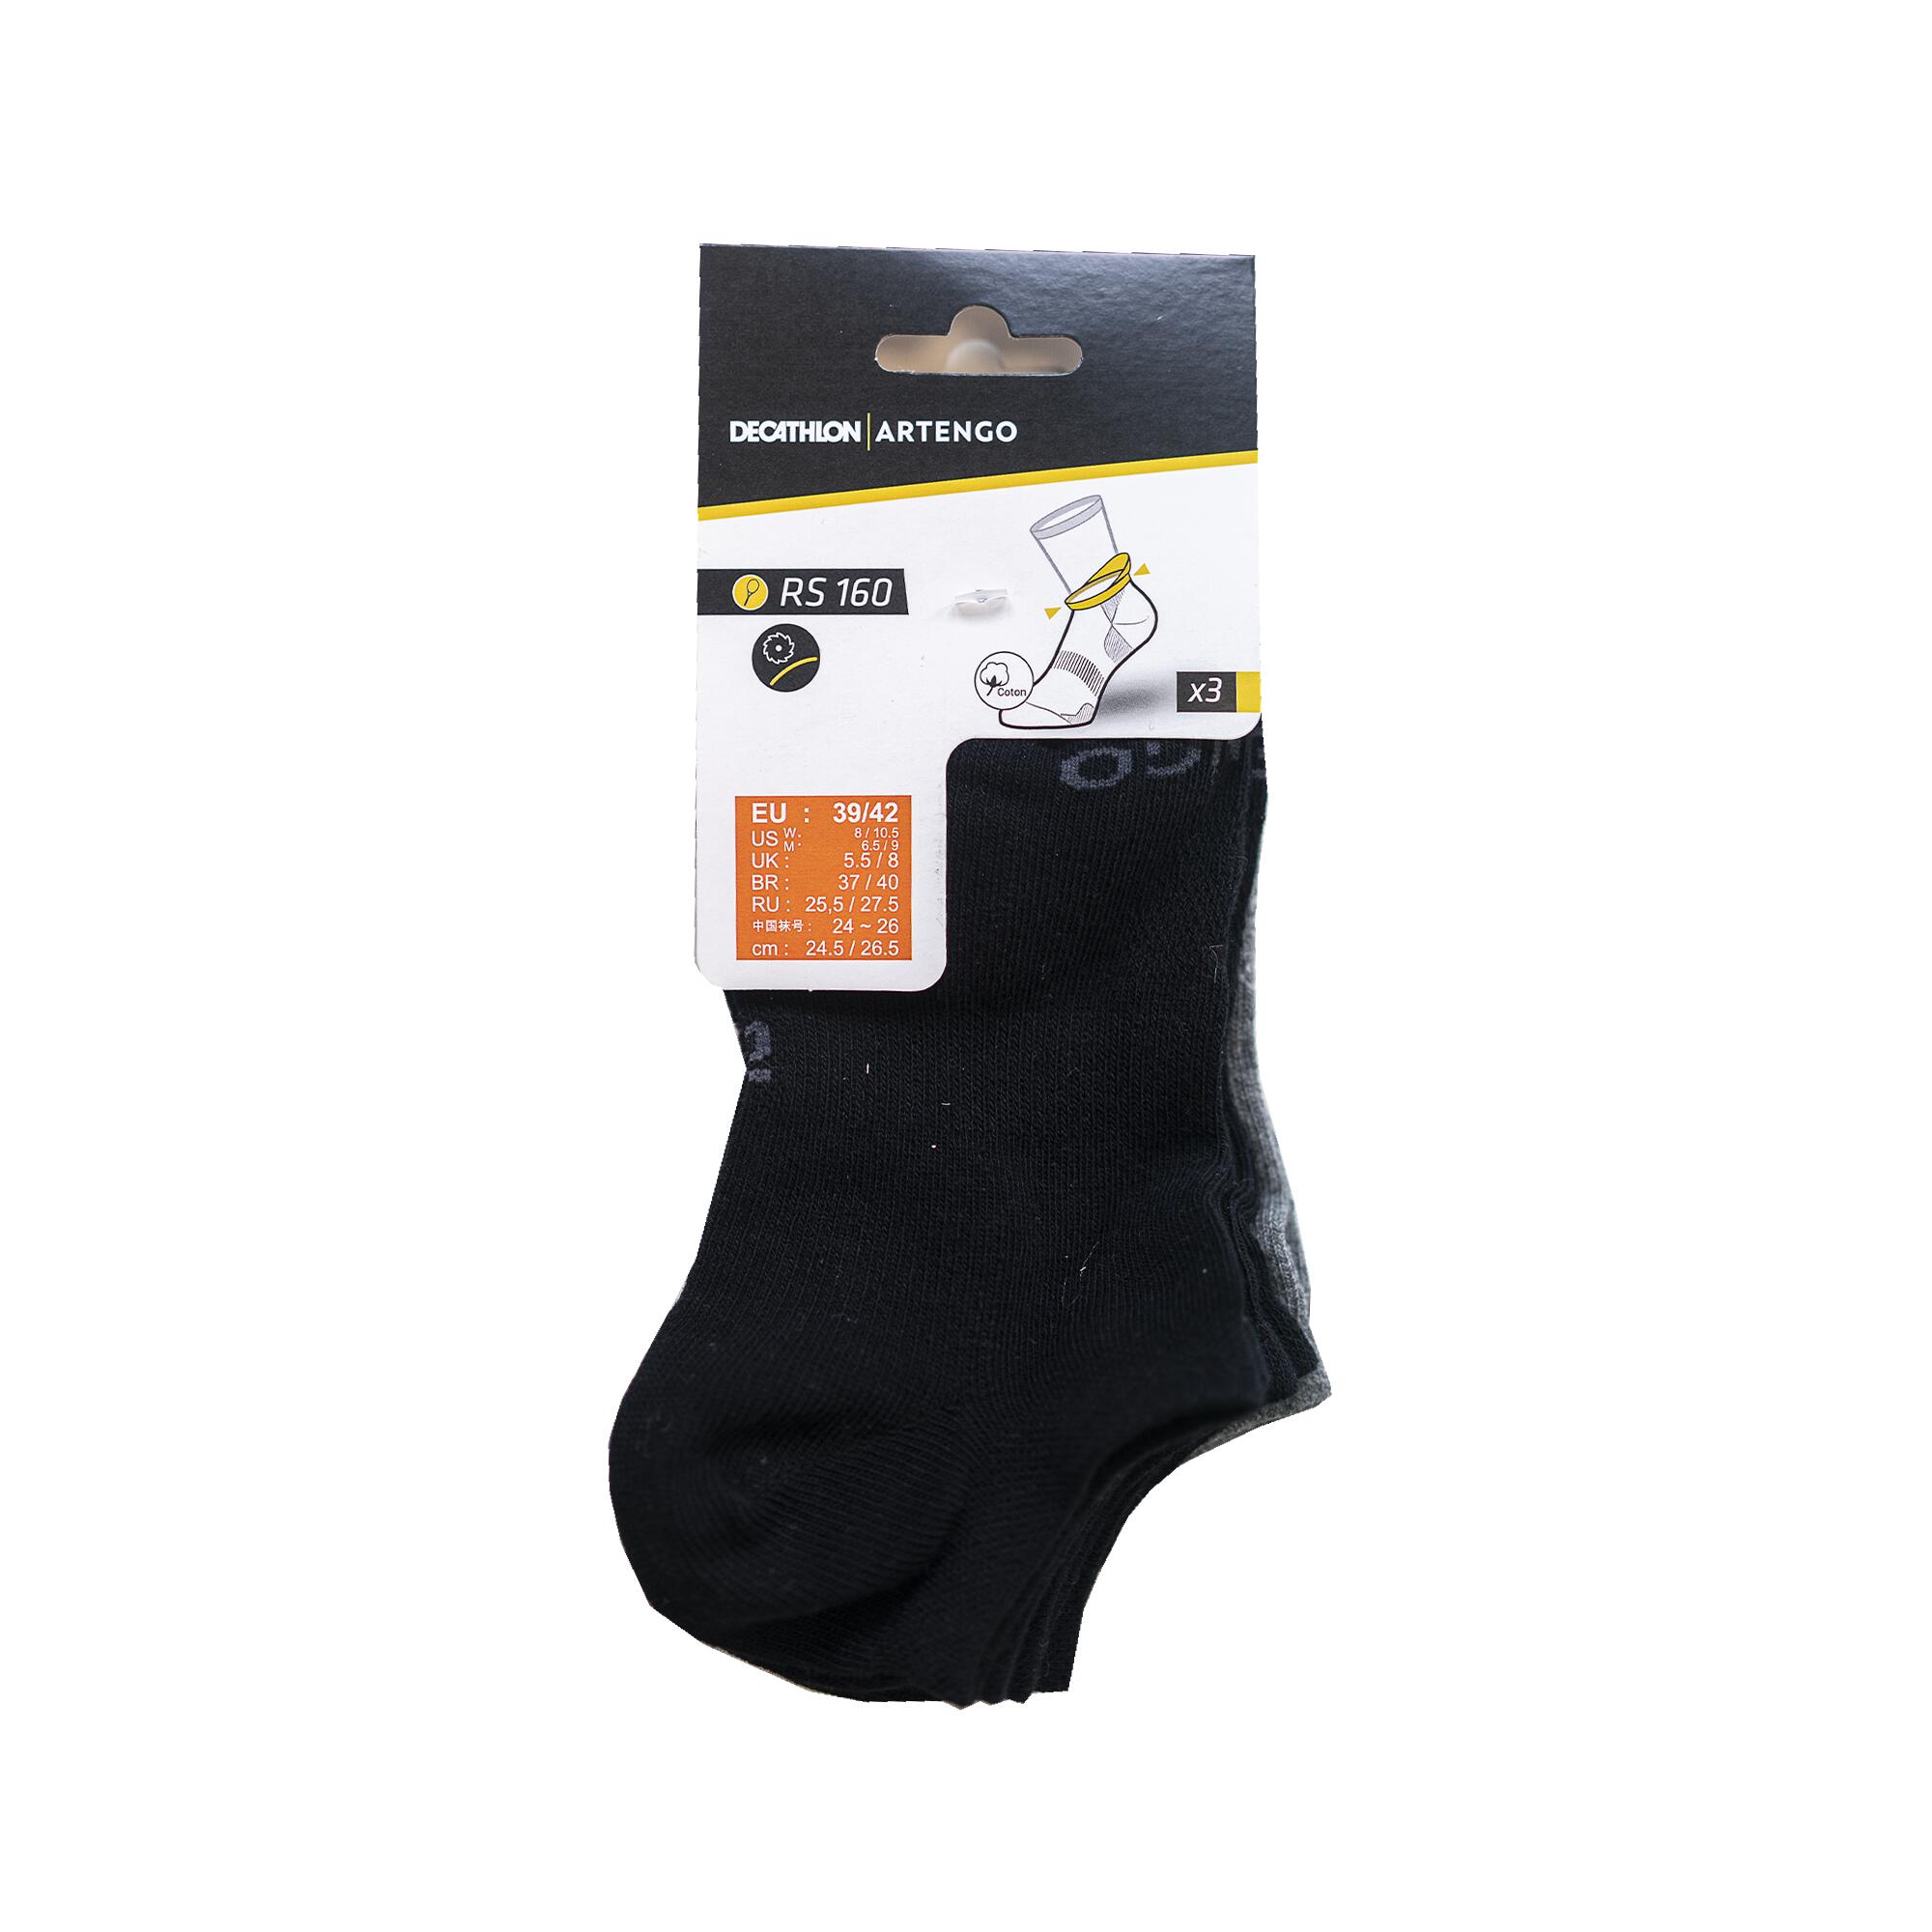 RS 160 Low Sports Socks 3-Pack - Black/Grey 10/10